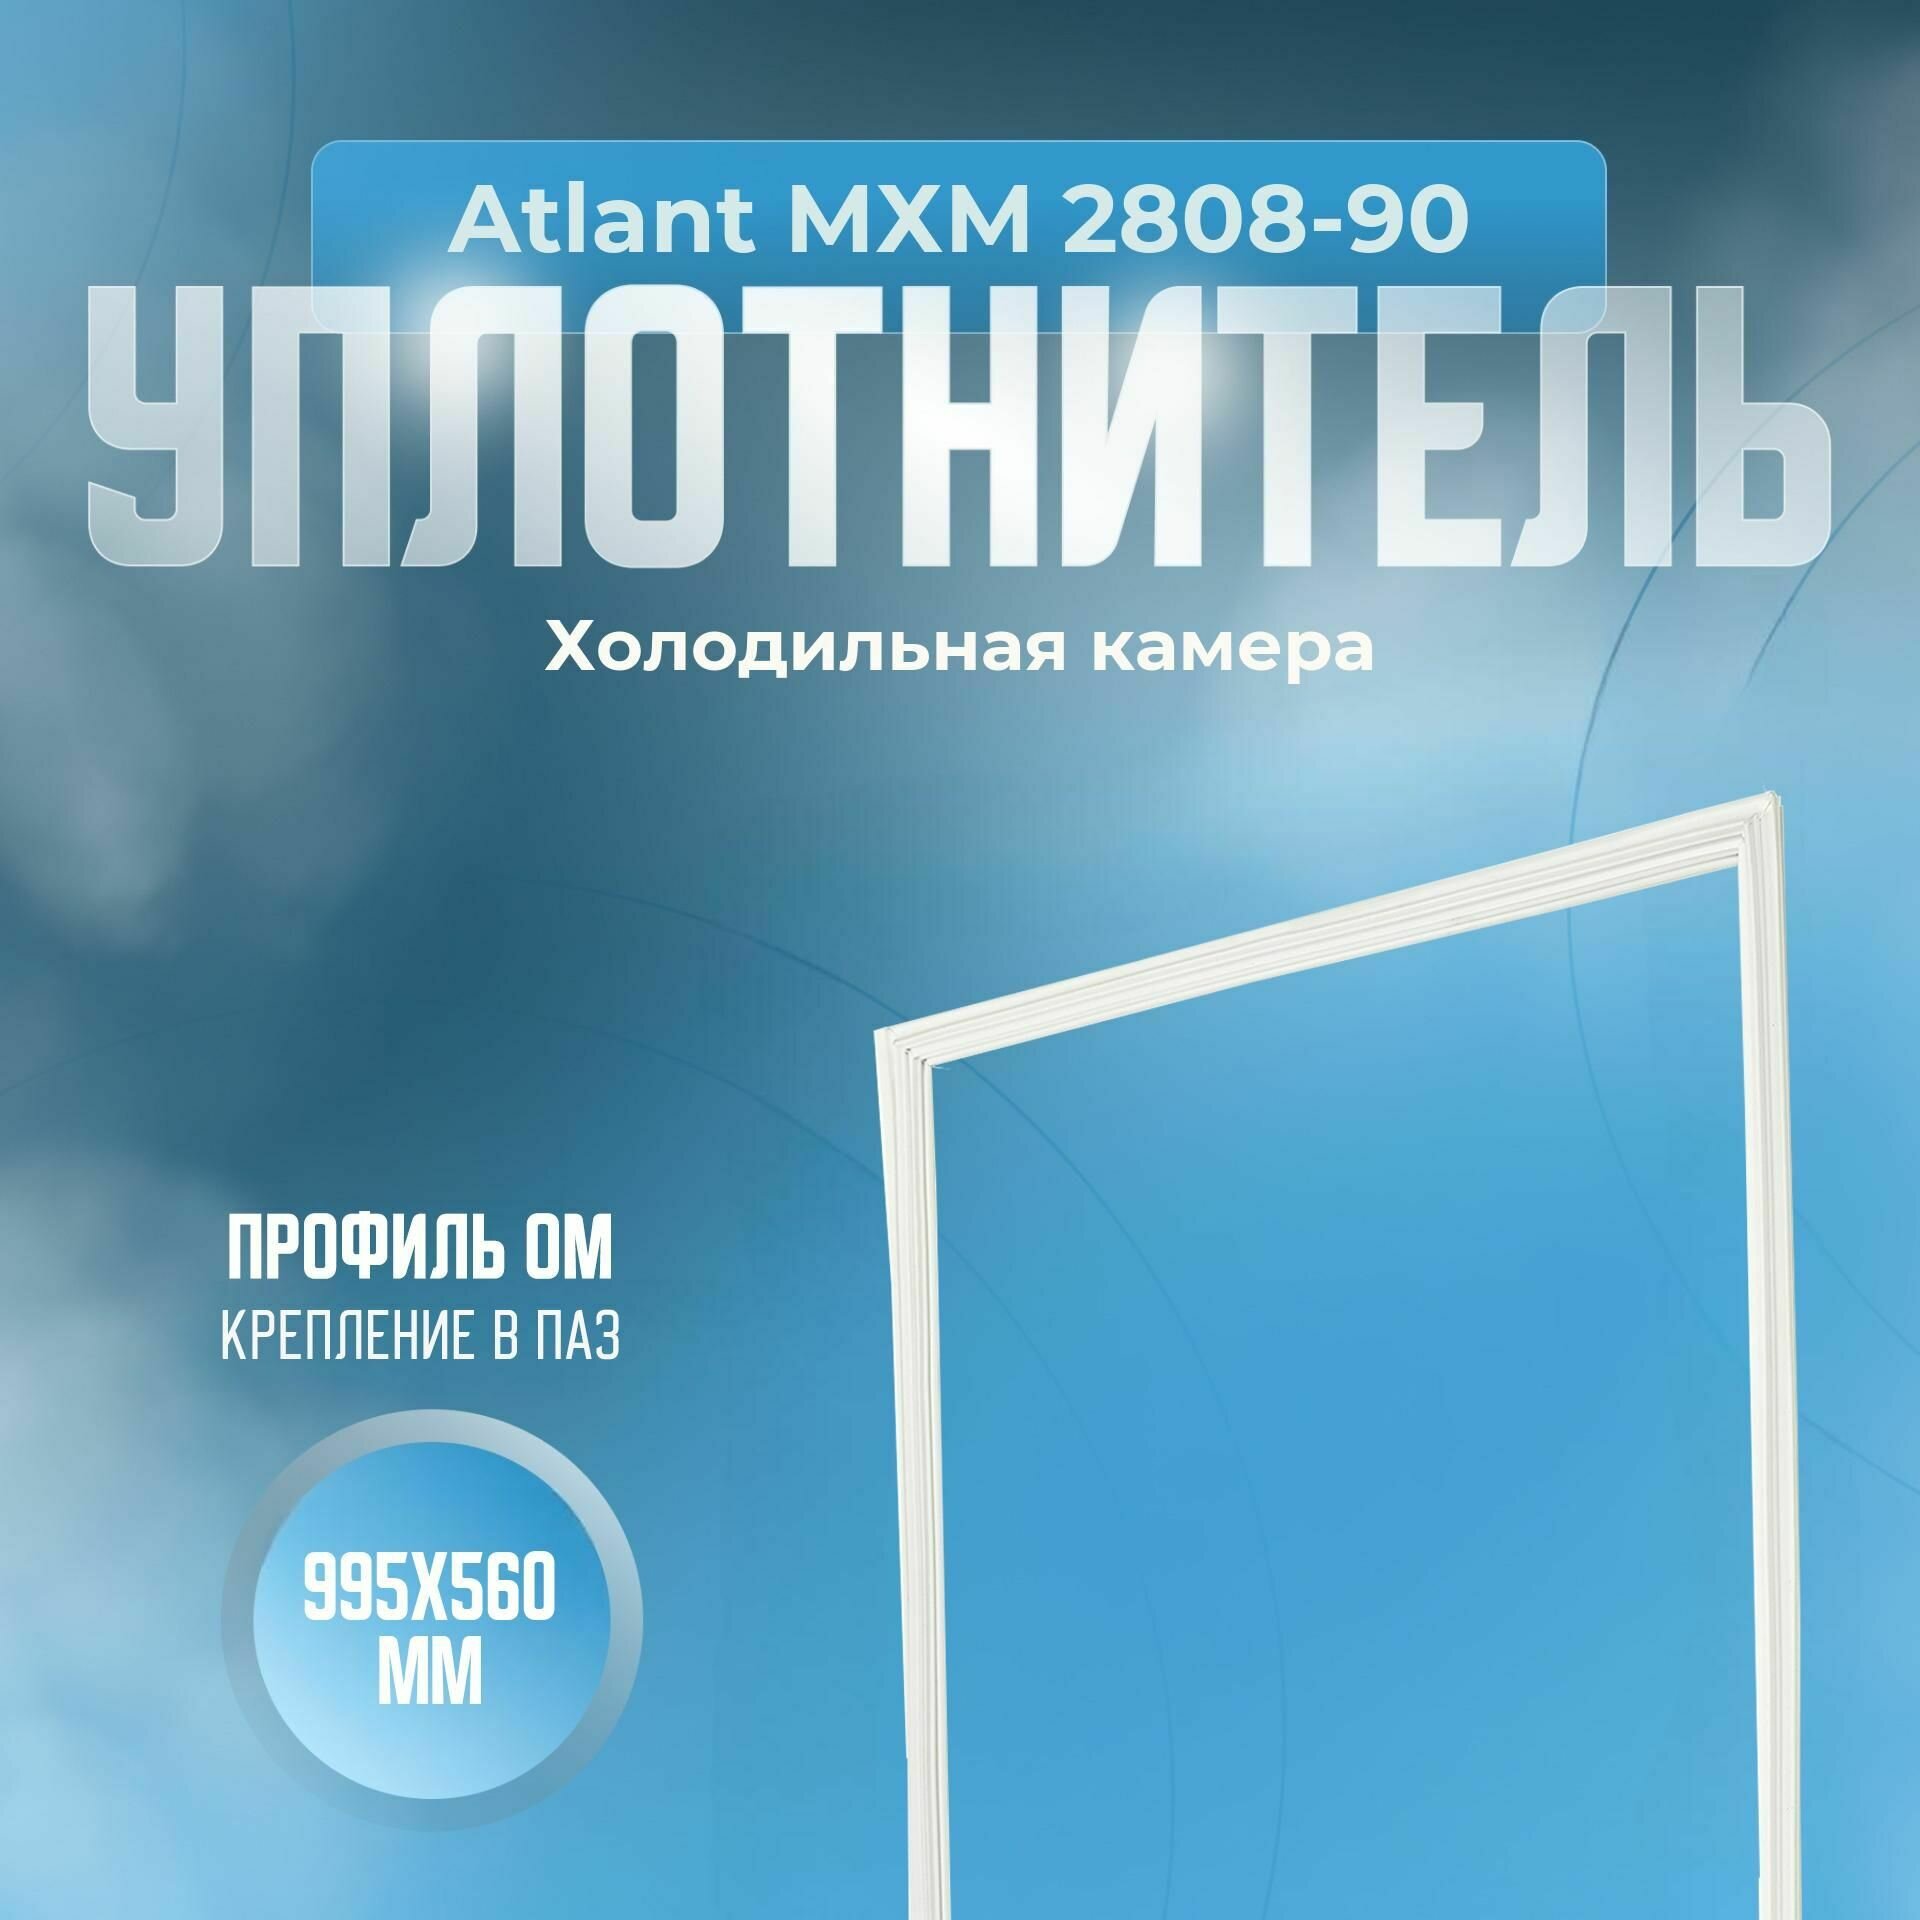 Уплотнитель Atlant МХМ 2808-90. х. к, Размер - 995х560 мм. ОМ